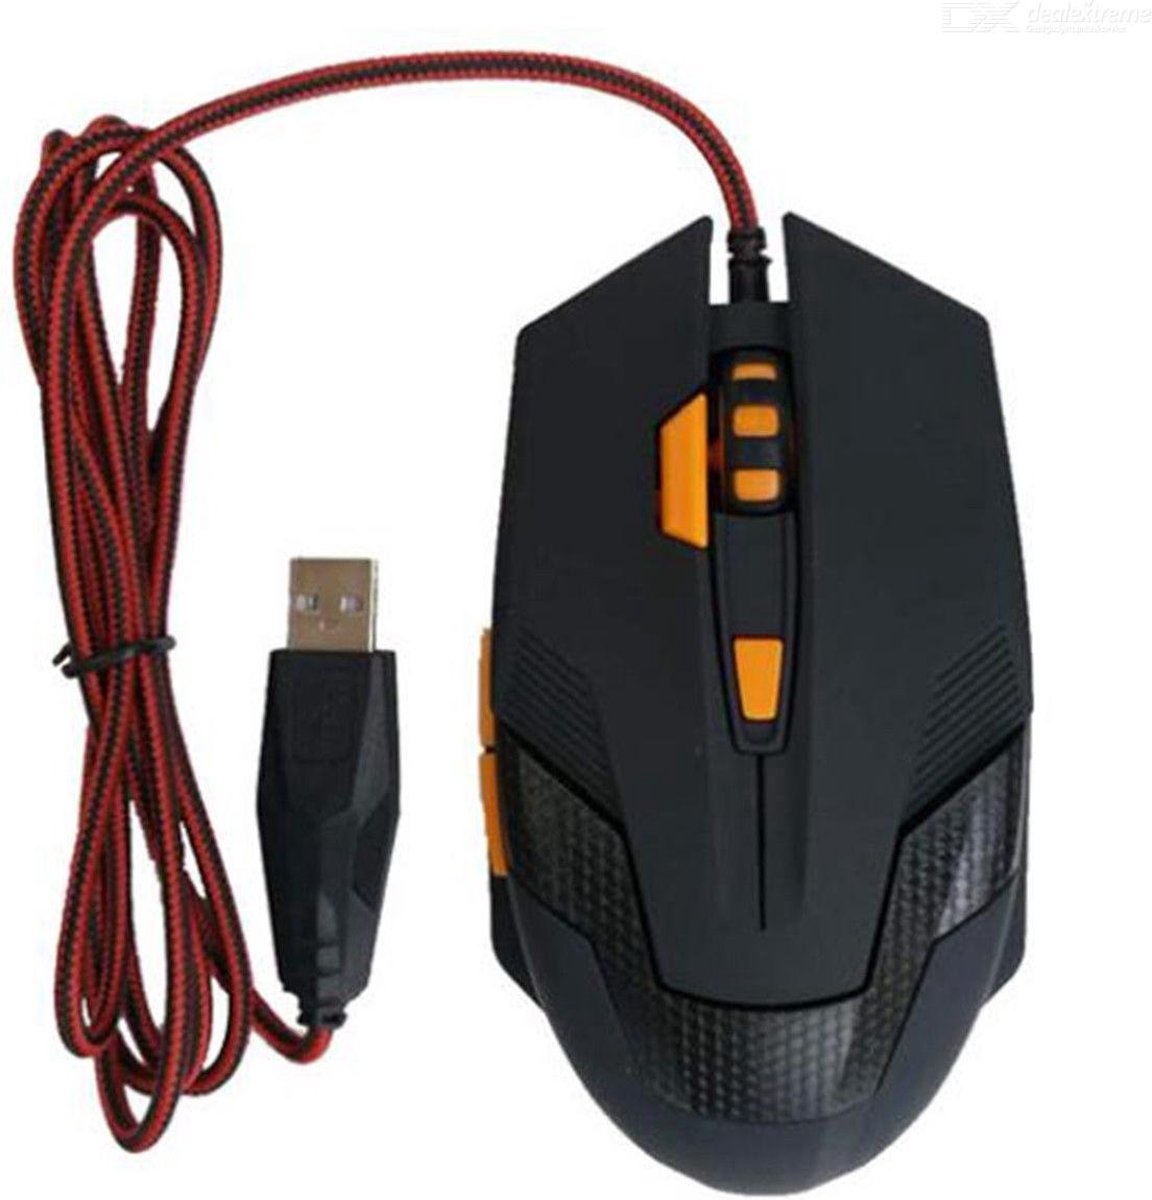 G-706 bedrade gaming muis 6 knoppen USB kabel muis voor laptop pc Windows  Computer | bol.com